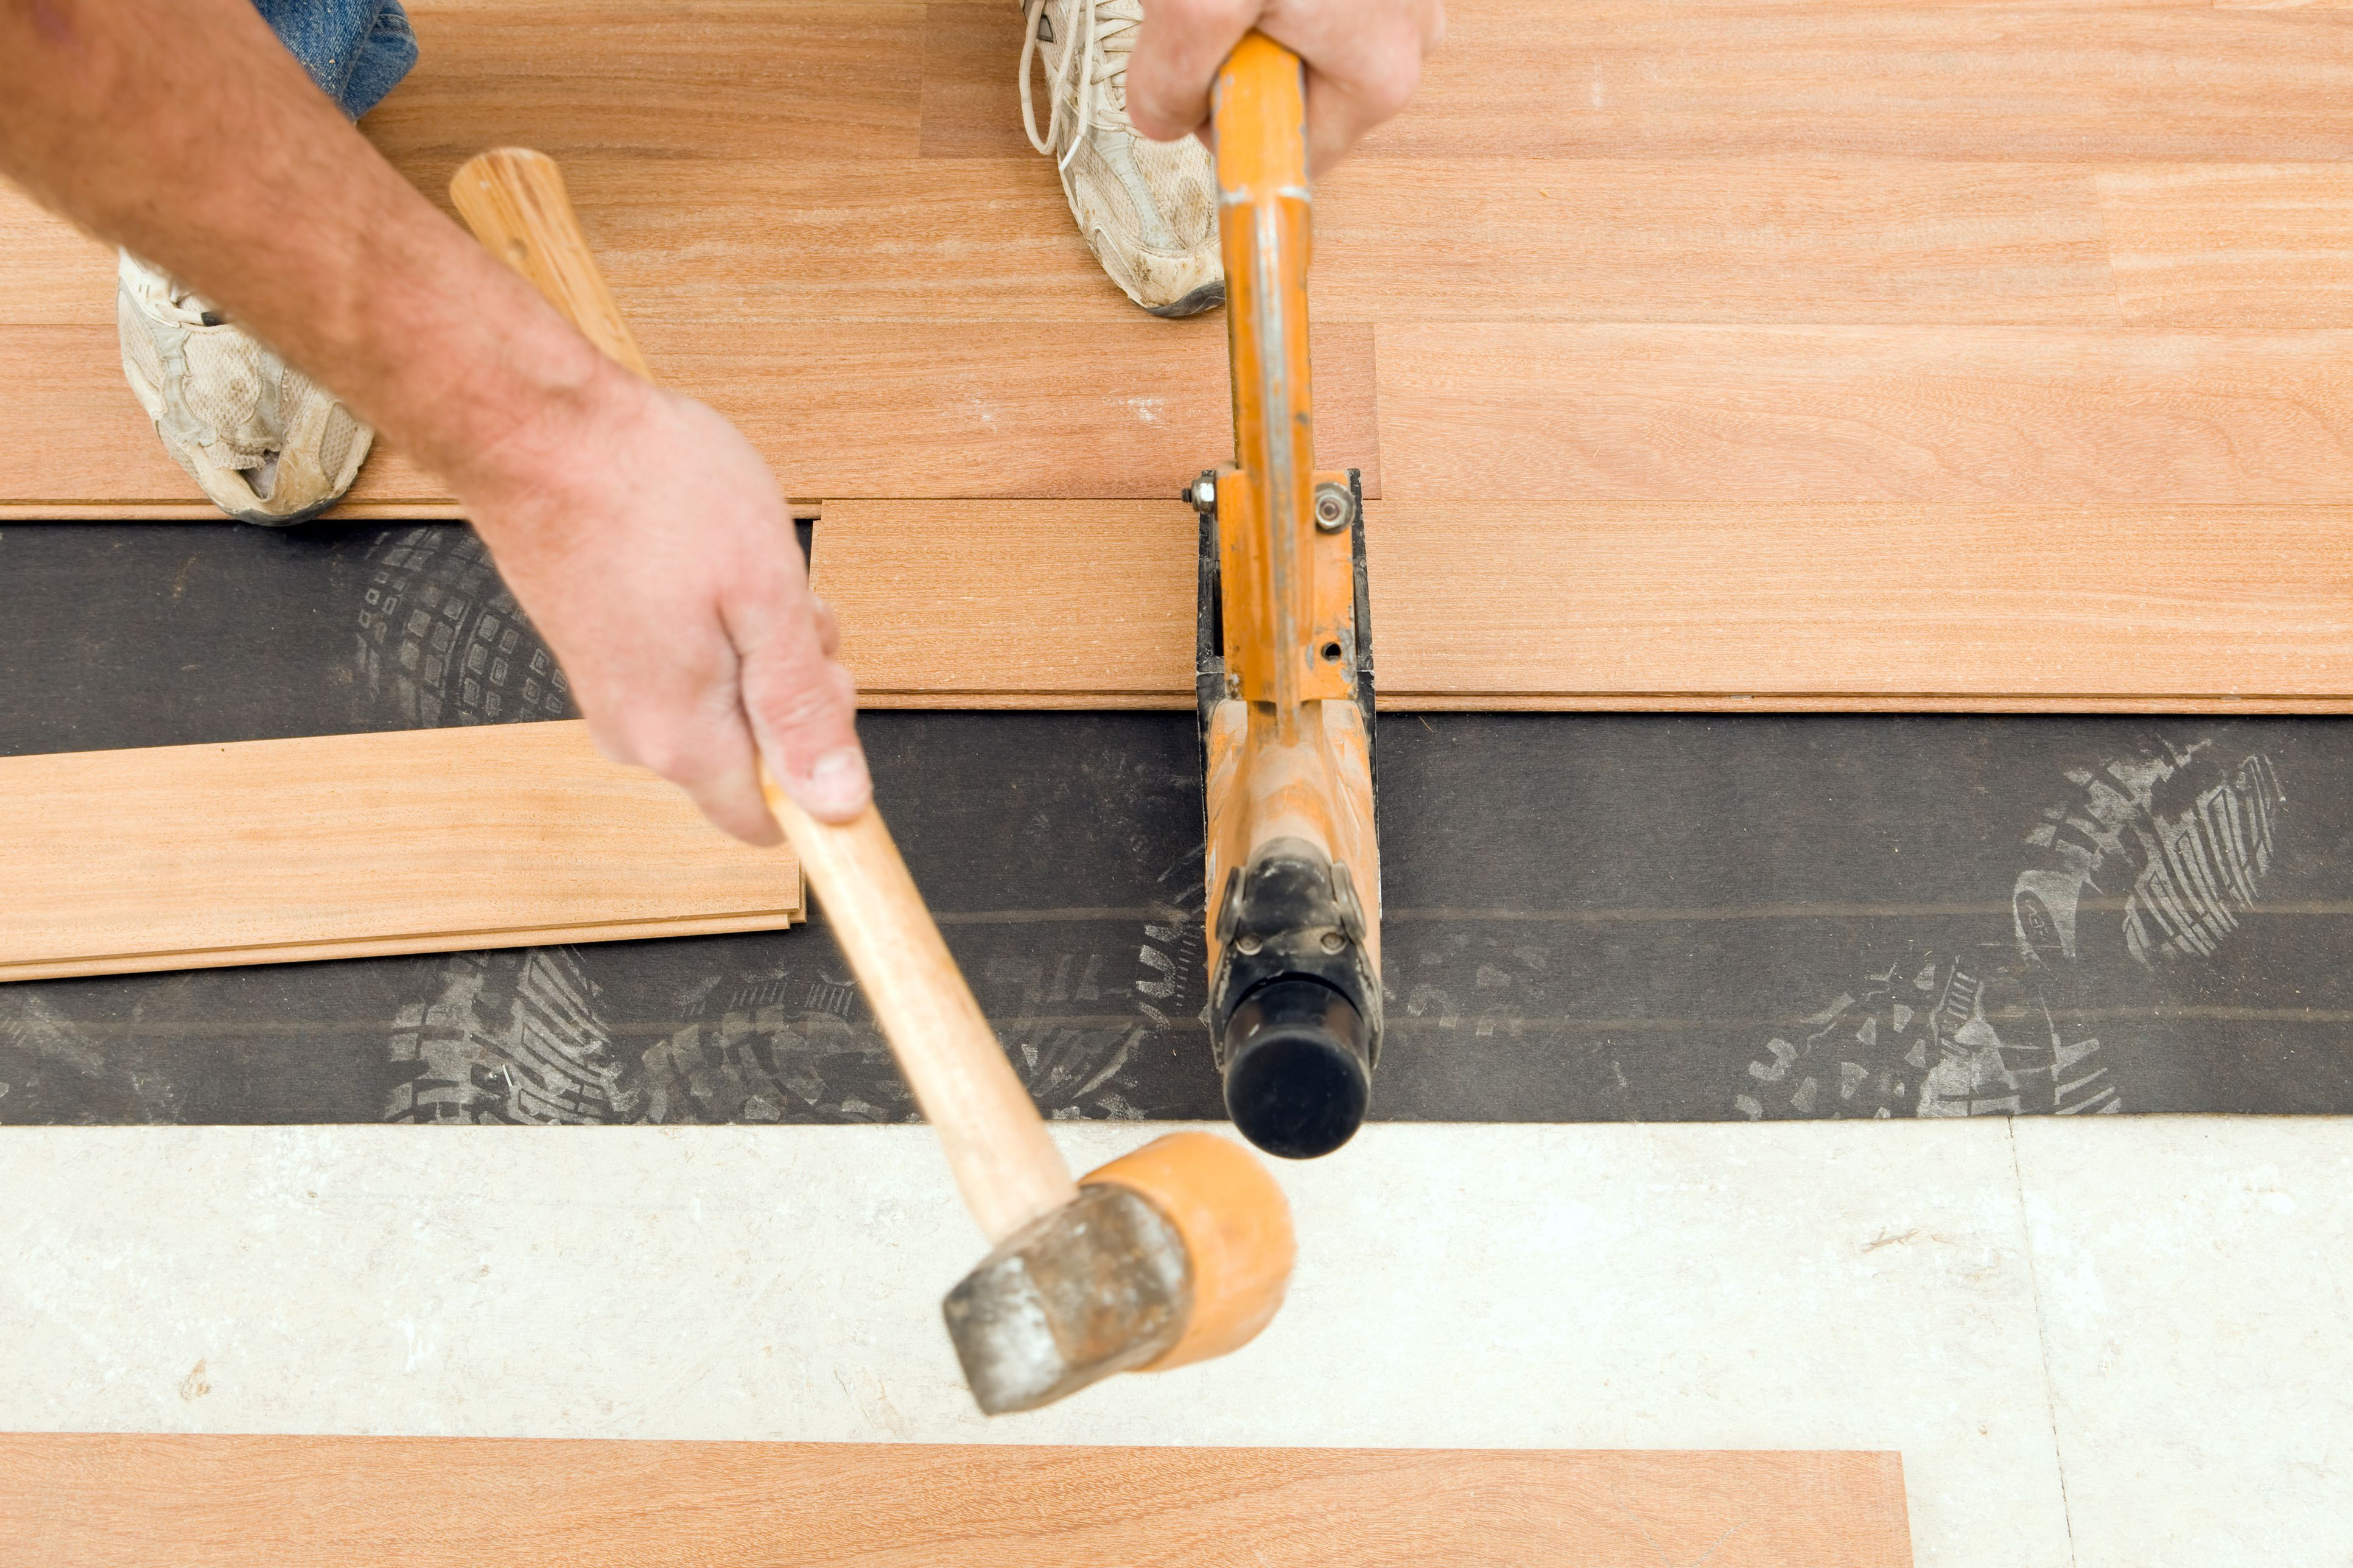 rustic hardwood flooring canada of the hardest wood flooring you can buy with worker installing new cumuru hardwood floor 186852280 5827f3bc5f9b58d5b11372fc